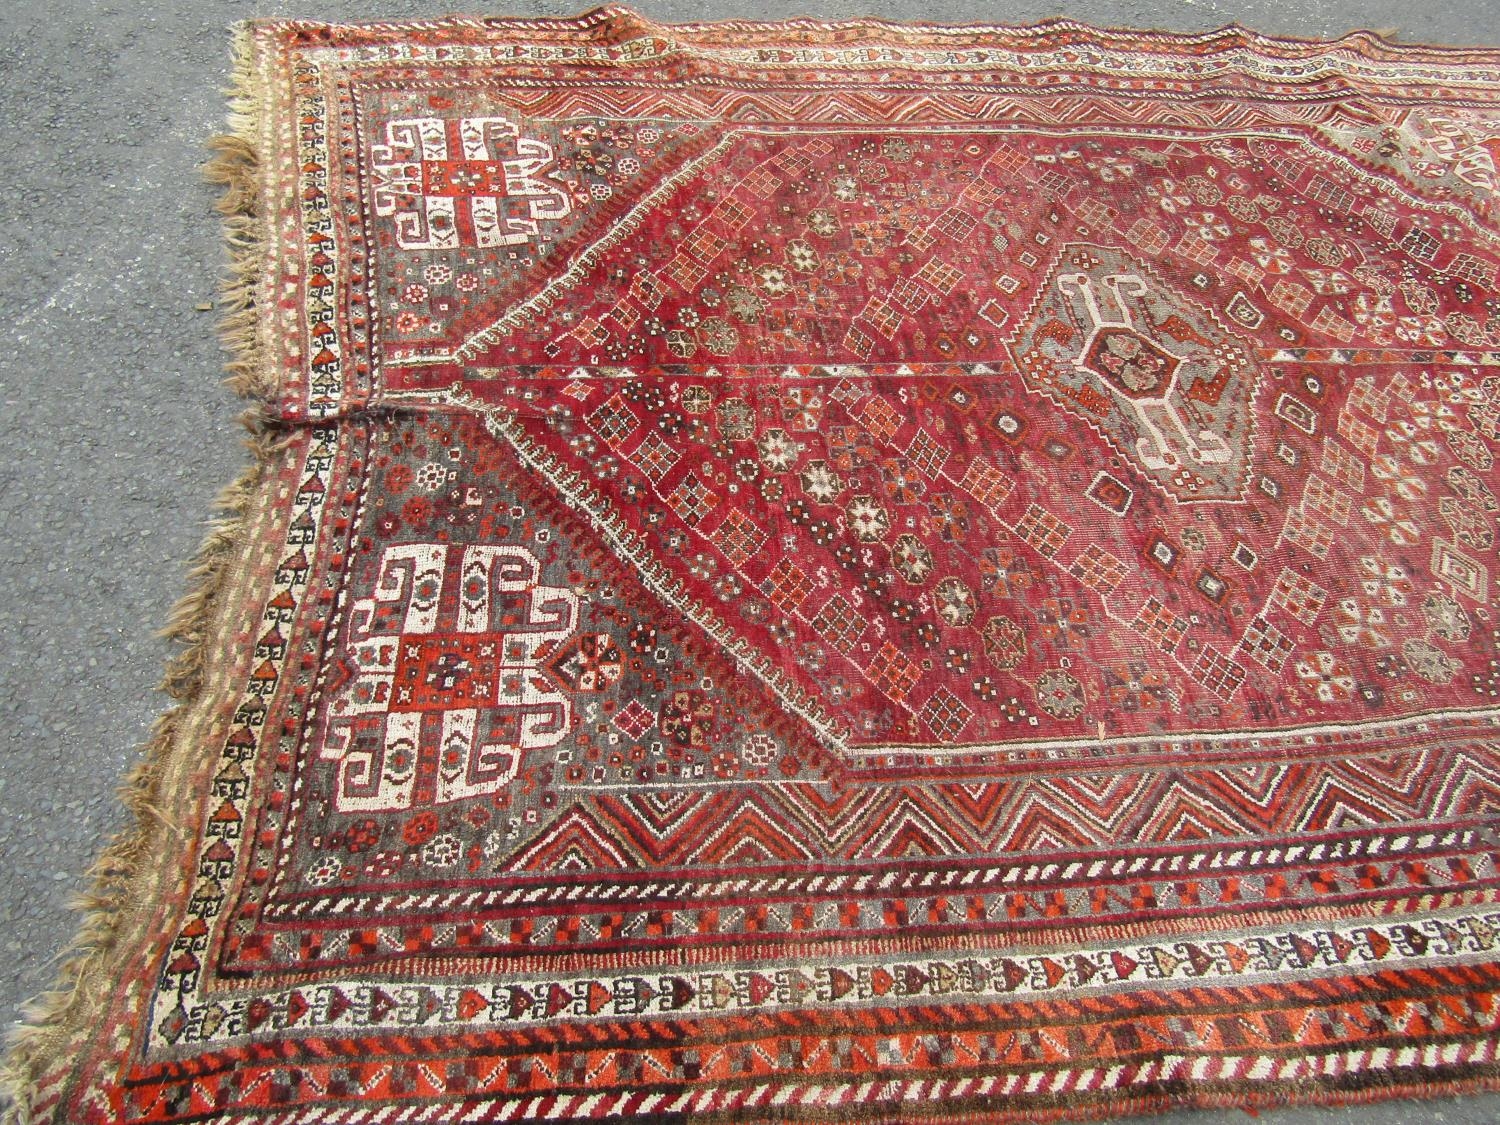 A slightly worn old Persian carpet, 280cm x 200cm - Image 2 of 4